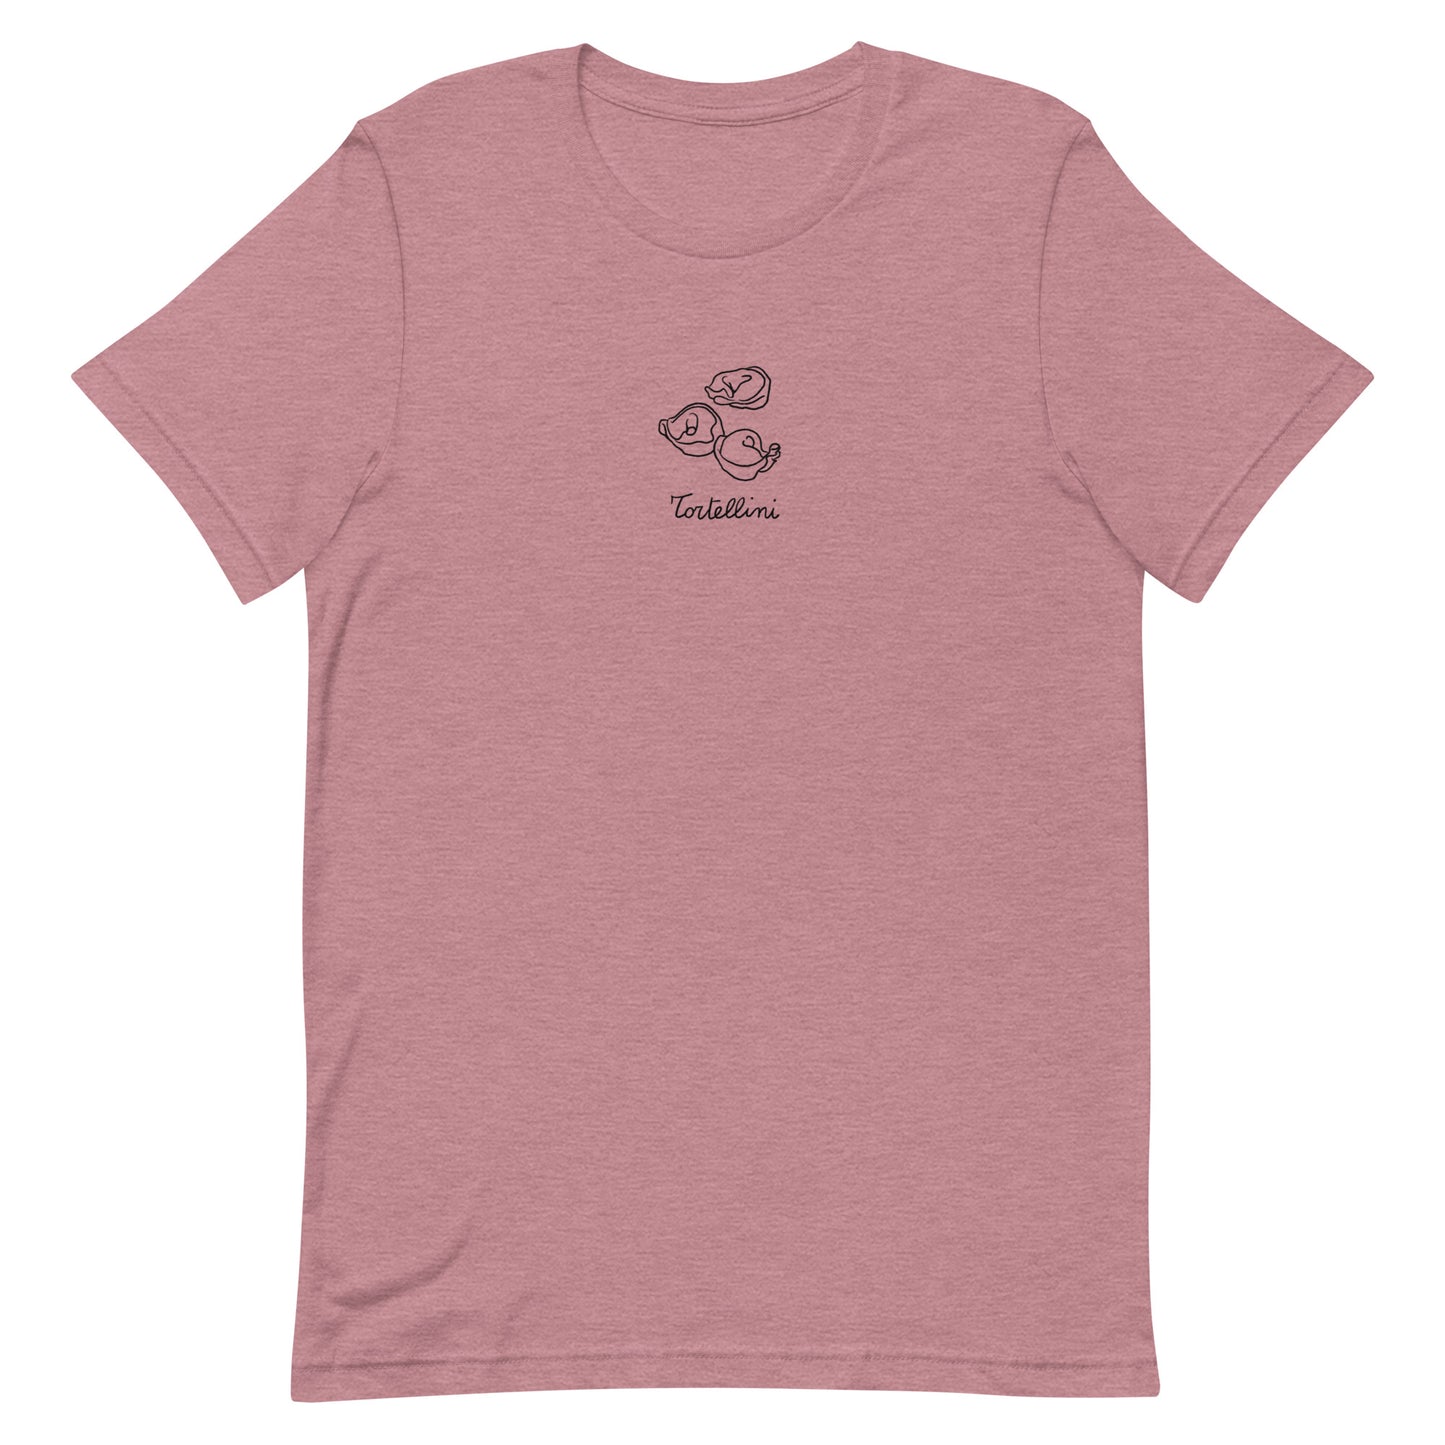 Tortellini on a Unisex t-shirt